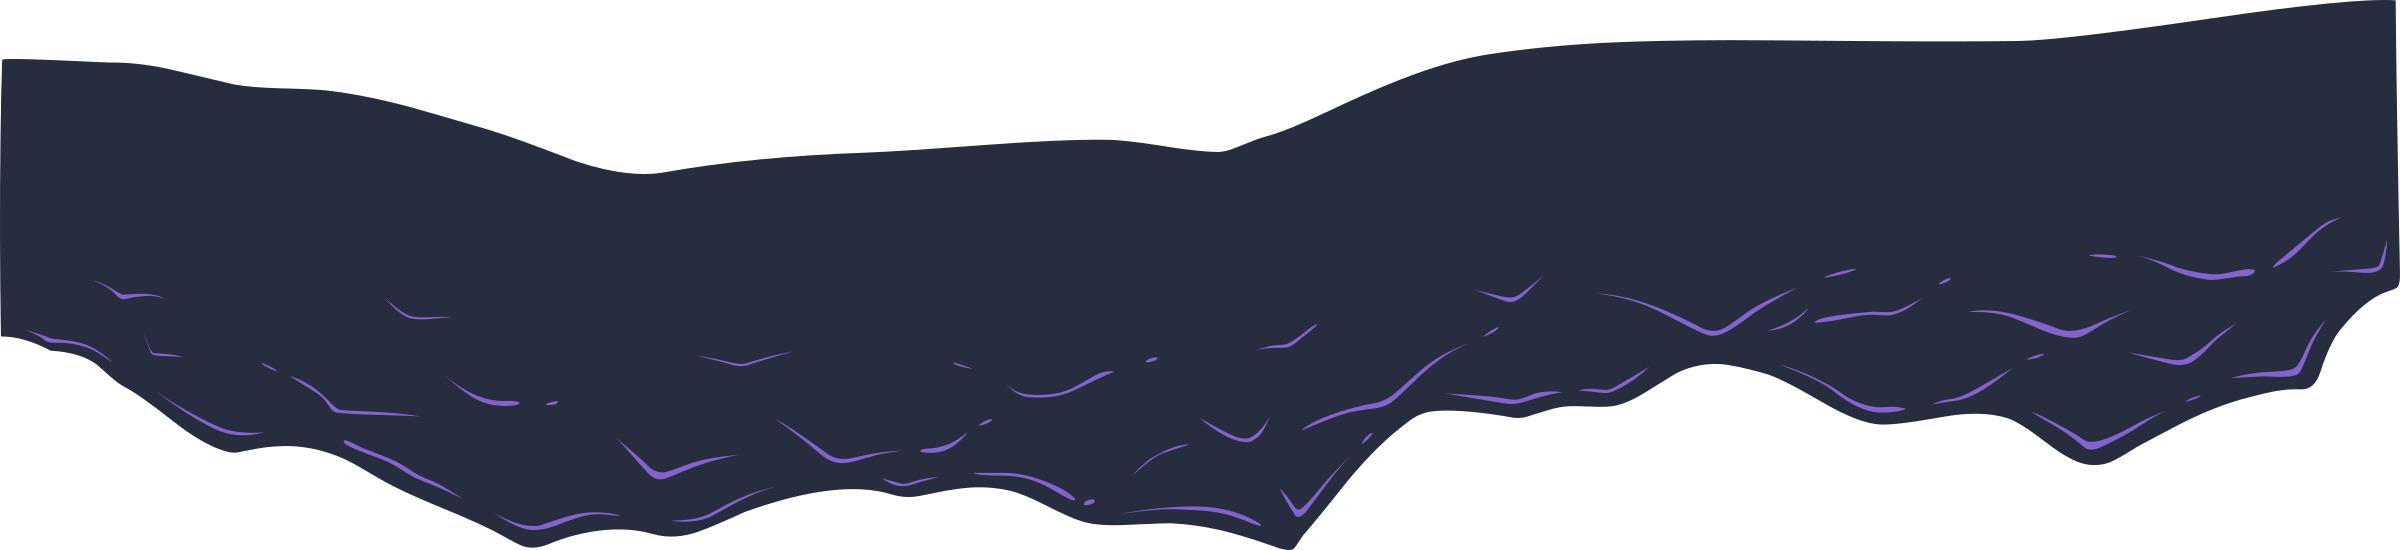 Ilmenskie Cave Gr Purple Large 2 PNG icons